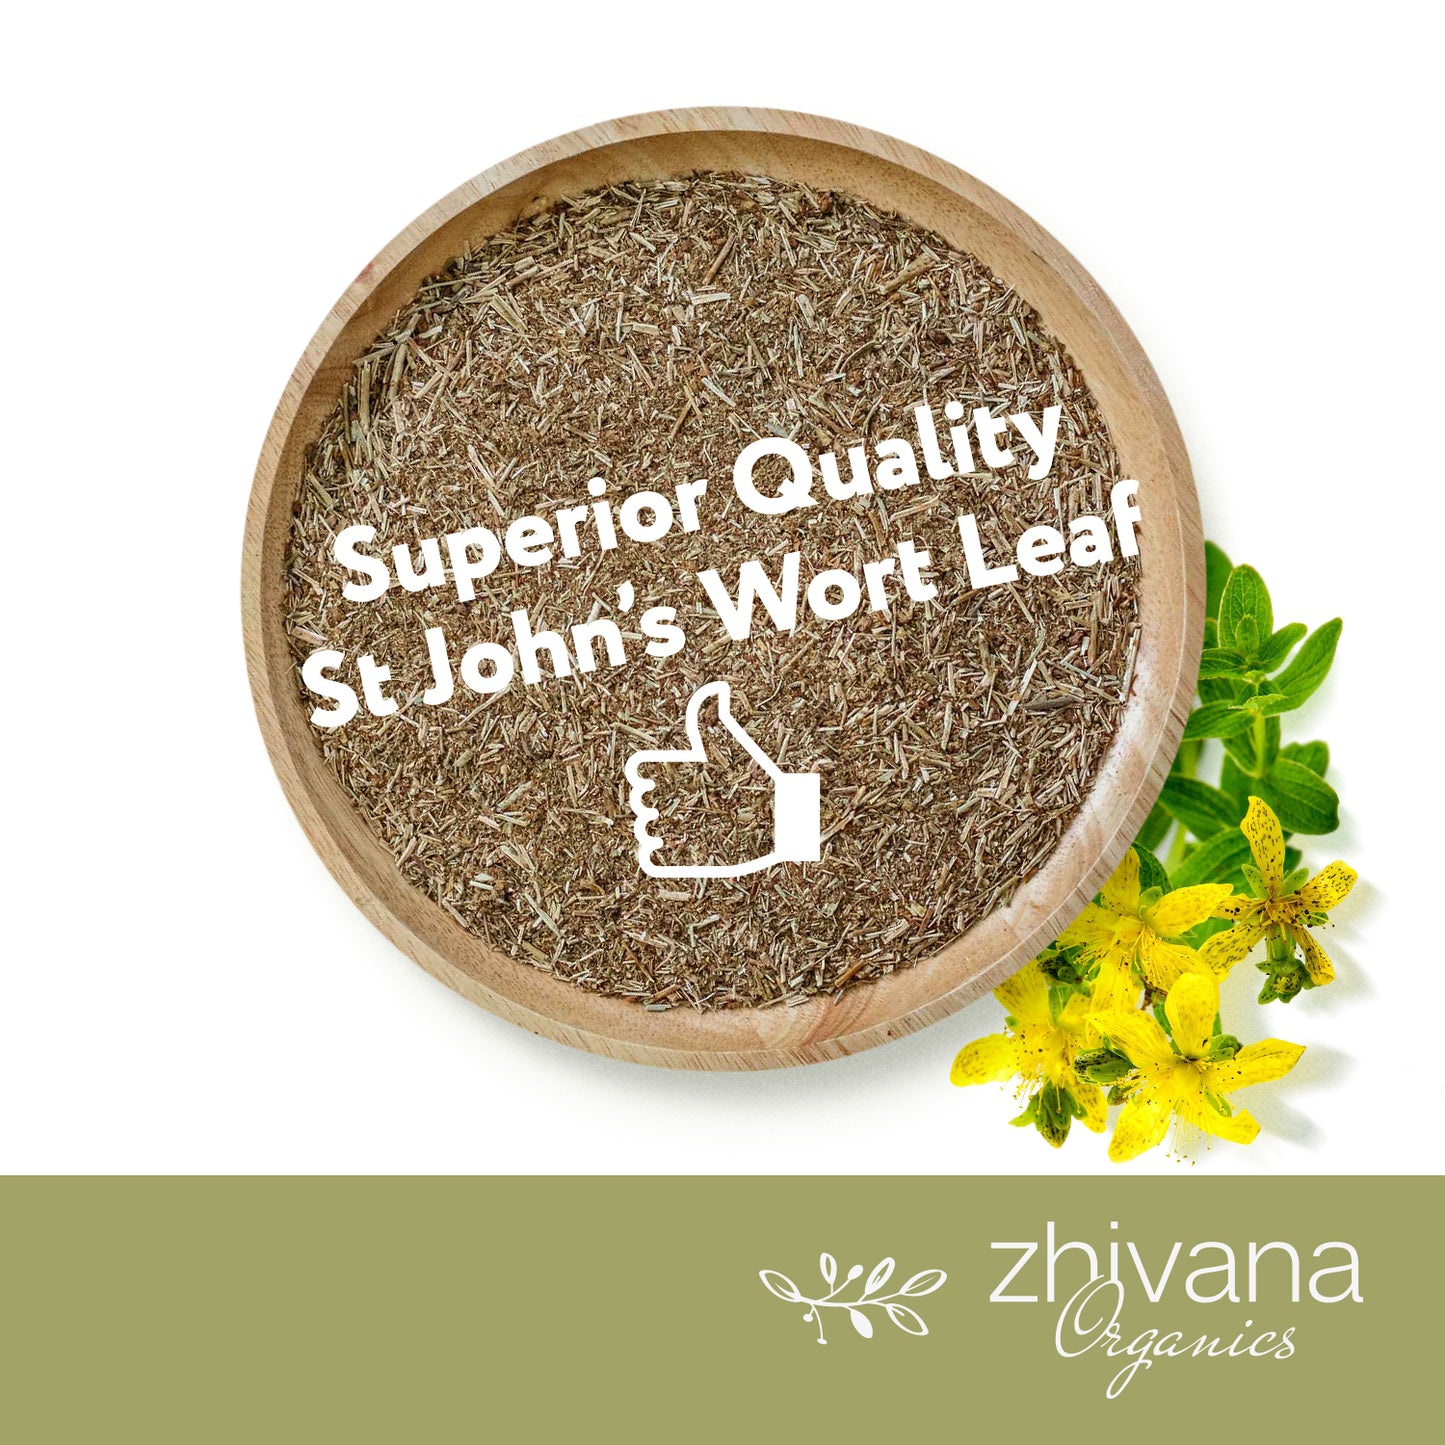 St Johns Wort Dried Cut & Sifted - Zhivana Organics